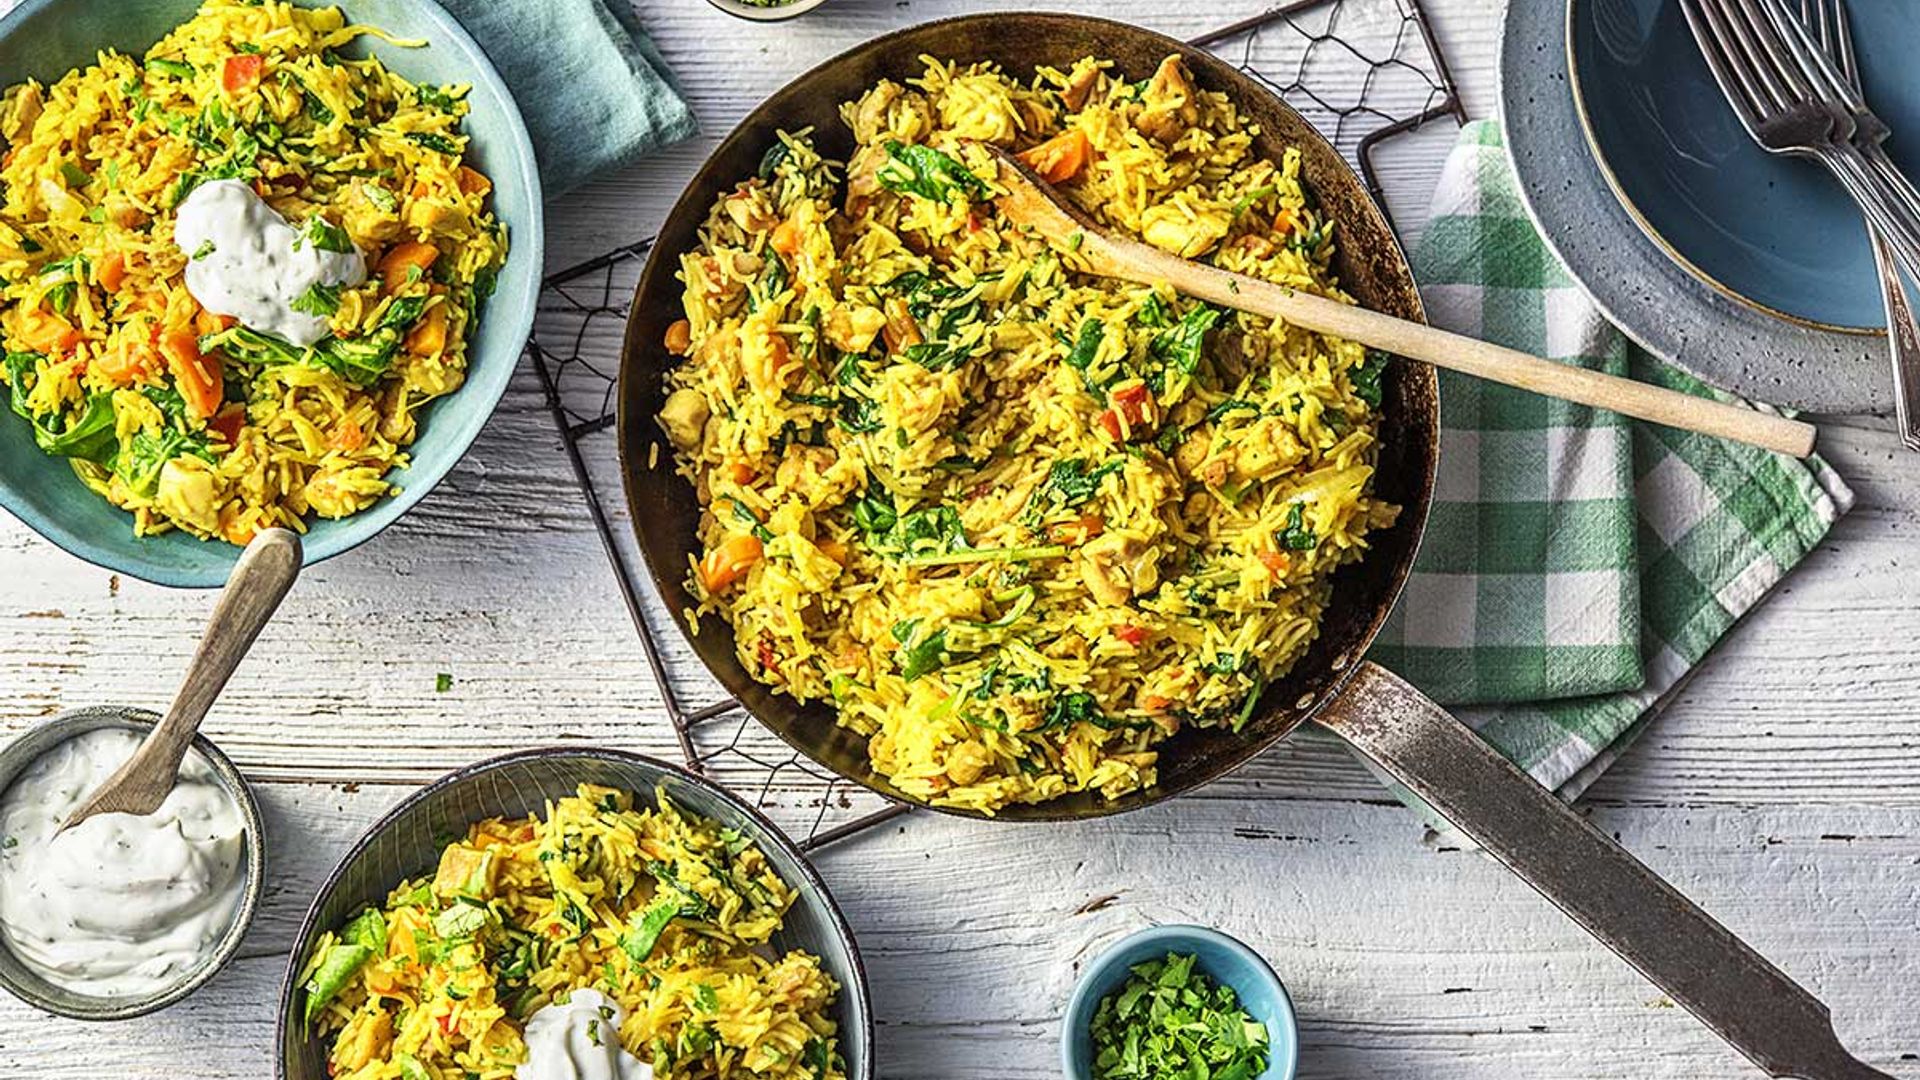 Craving an Indian? This healthy chicken biryani recipe tastes restaurant quality